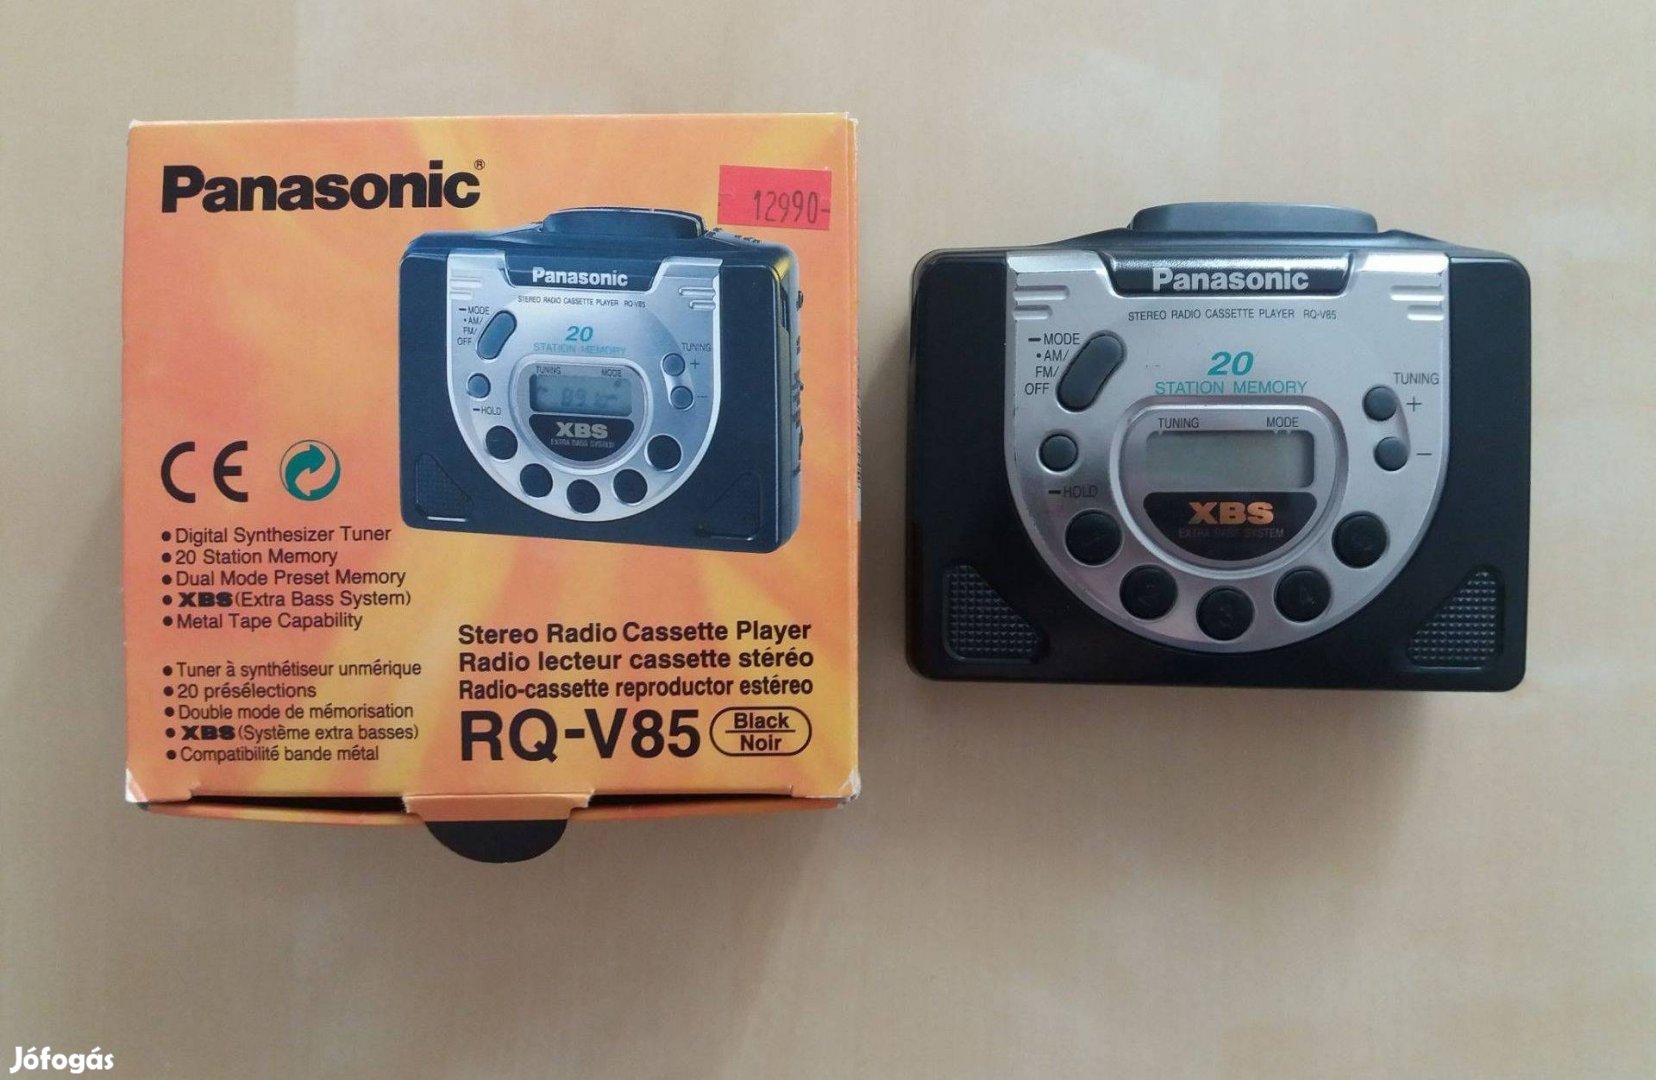 Panasonic RQ-V85 Stereo Radio Cassette Player